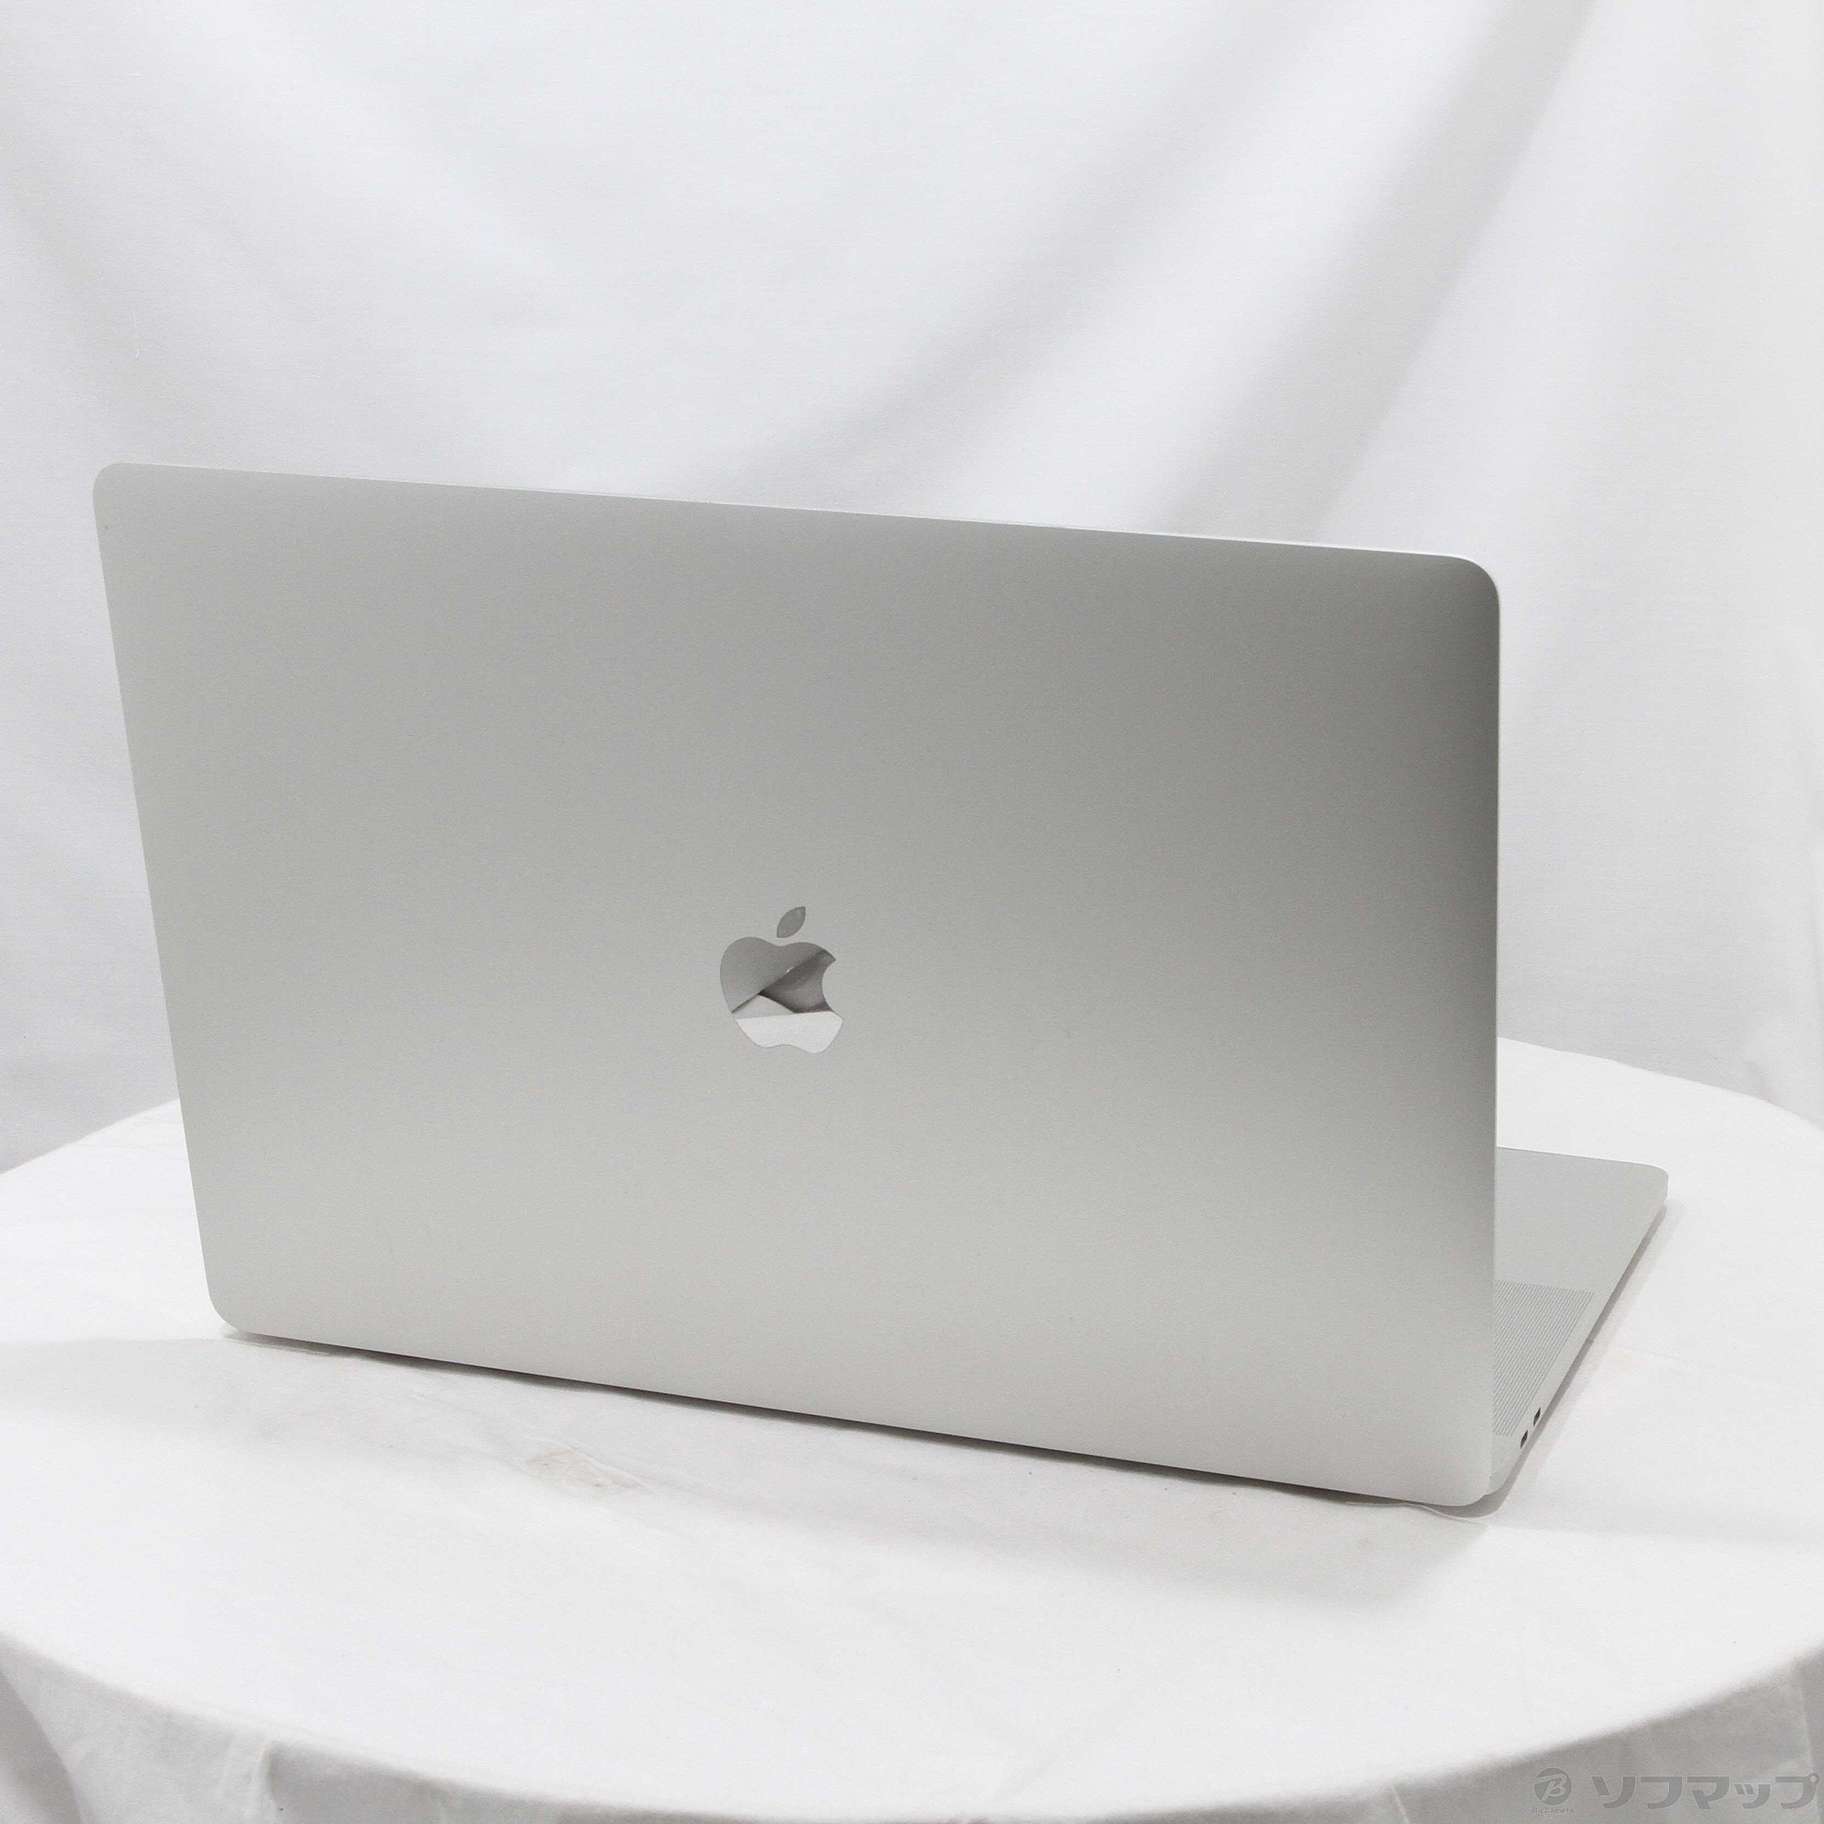 中古品〕 MacBook Pro 15-inch Mid 2018 MR962J／A Core_i7 2.2GHz ...